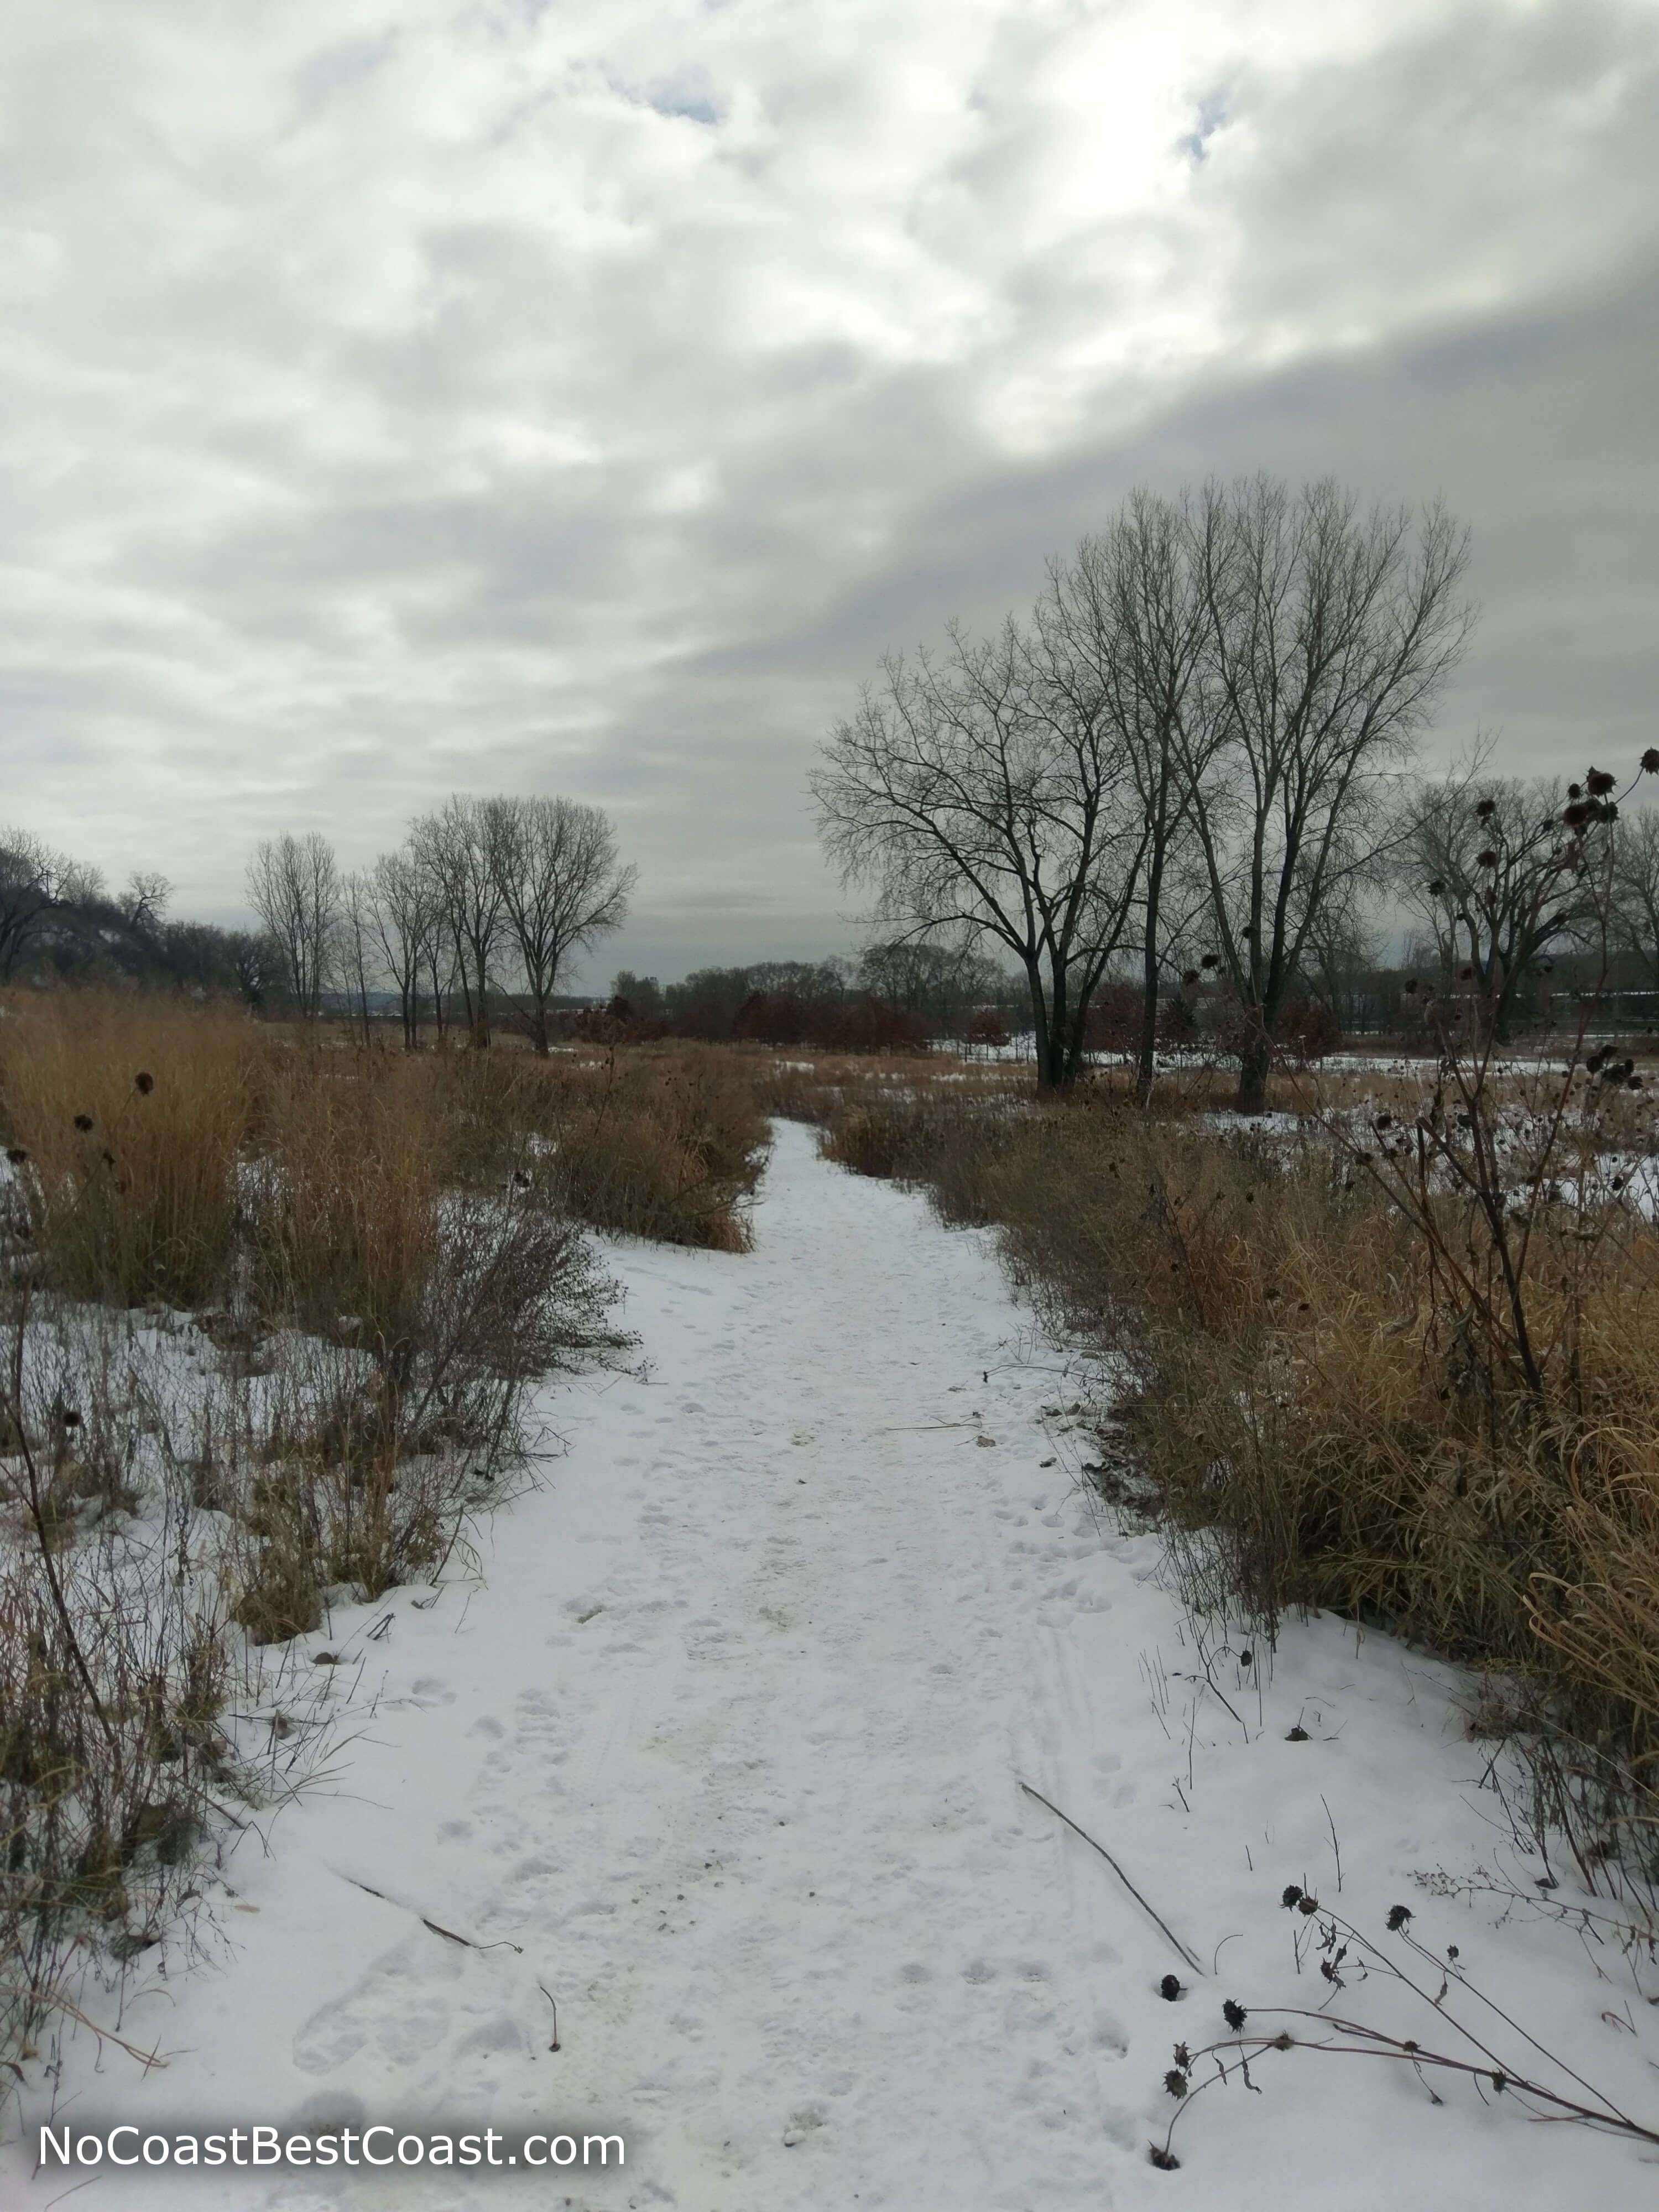 The snowy trail through the frozen prairie